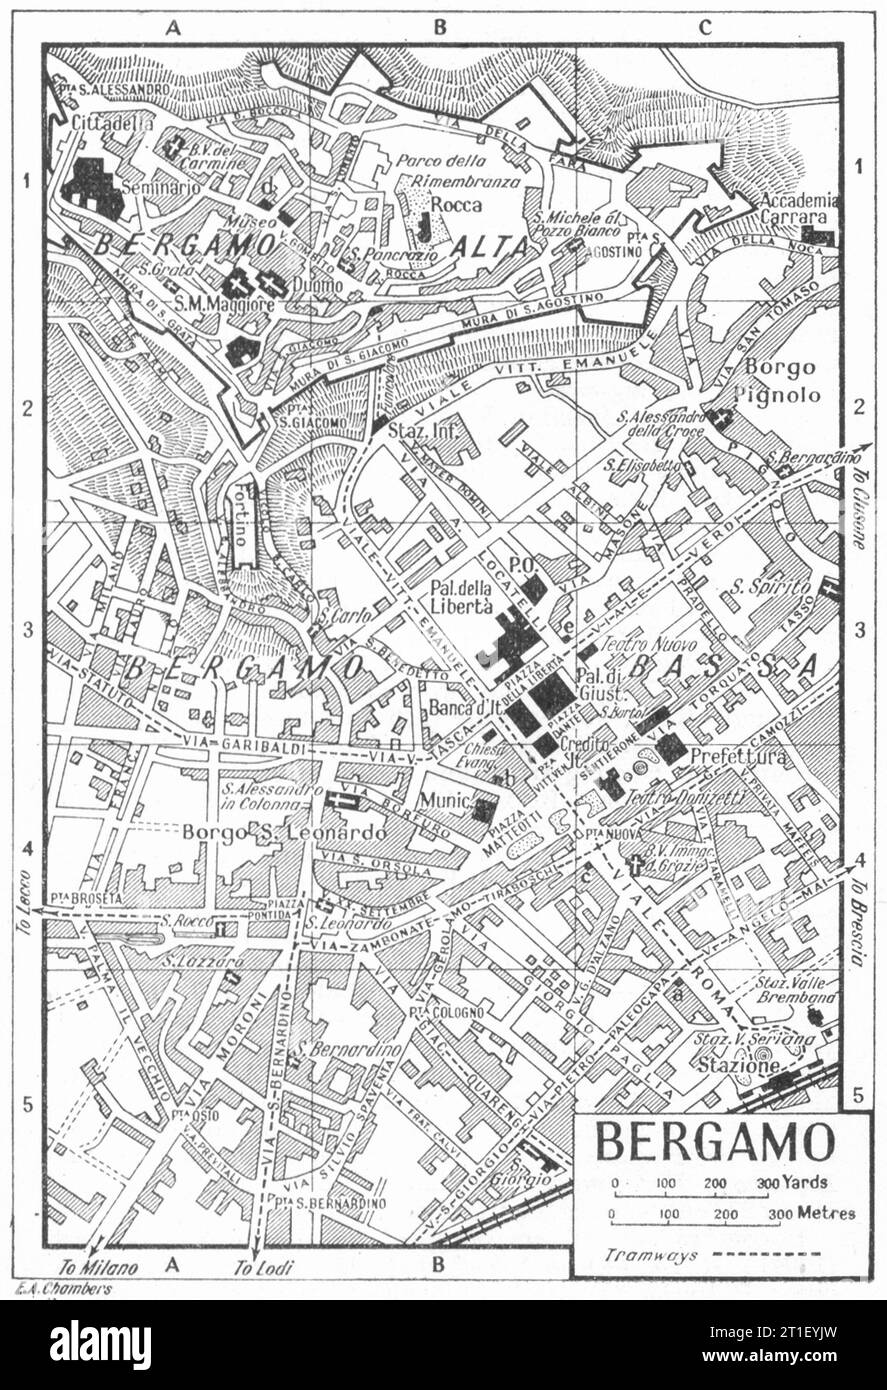 BERGAMO town/city plan. Italy 1953 old vintage map chart Stock Photo